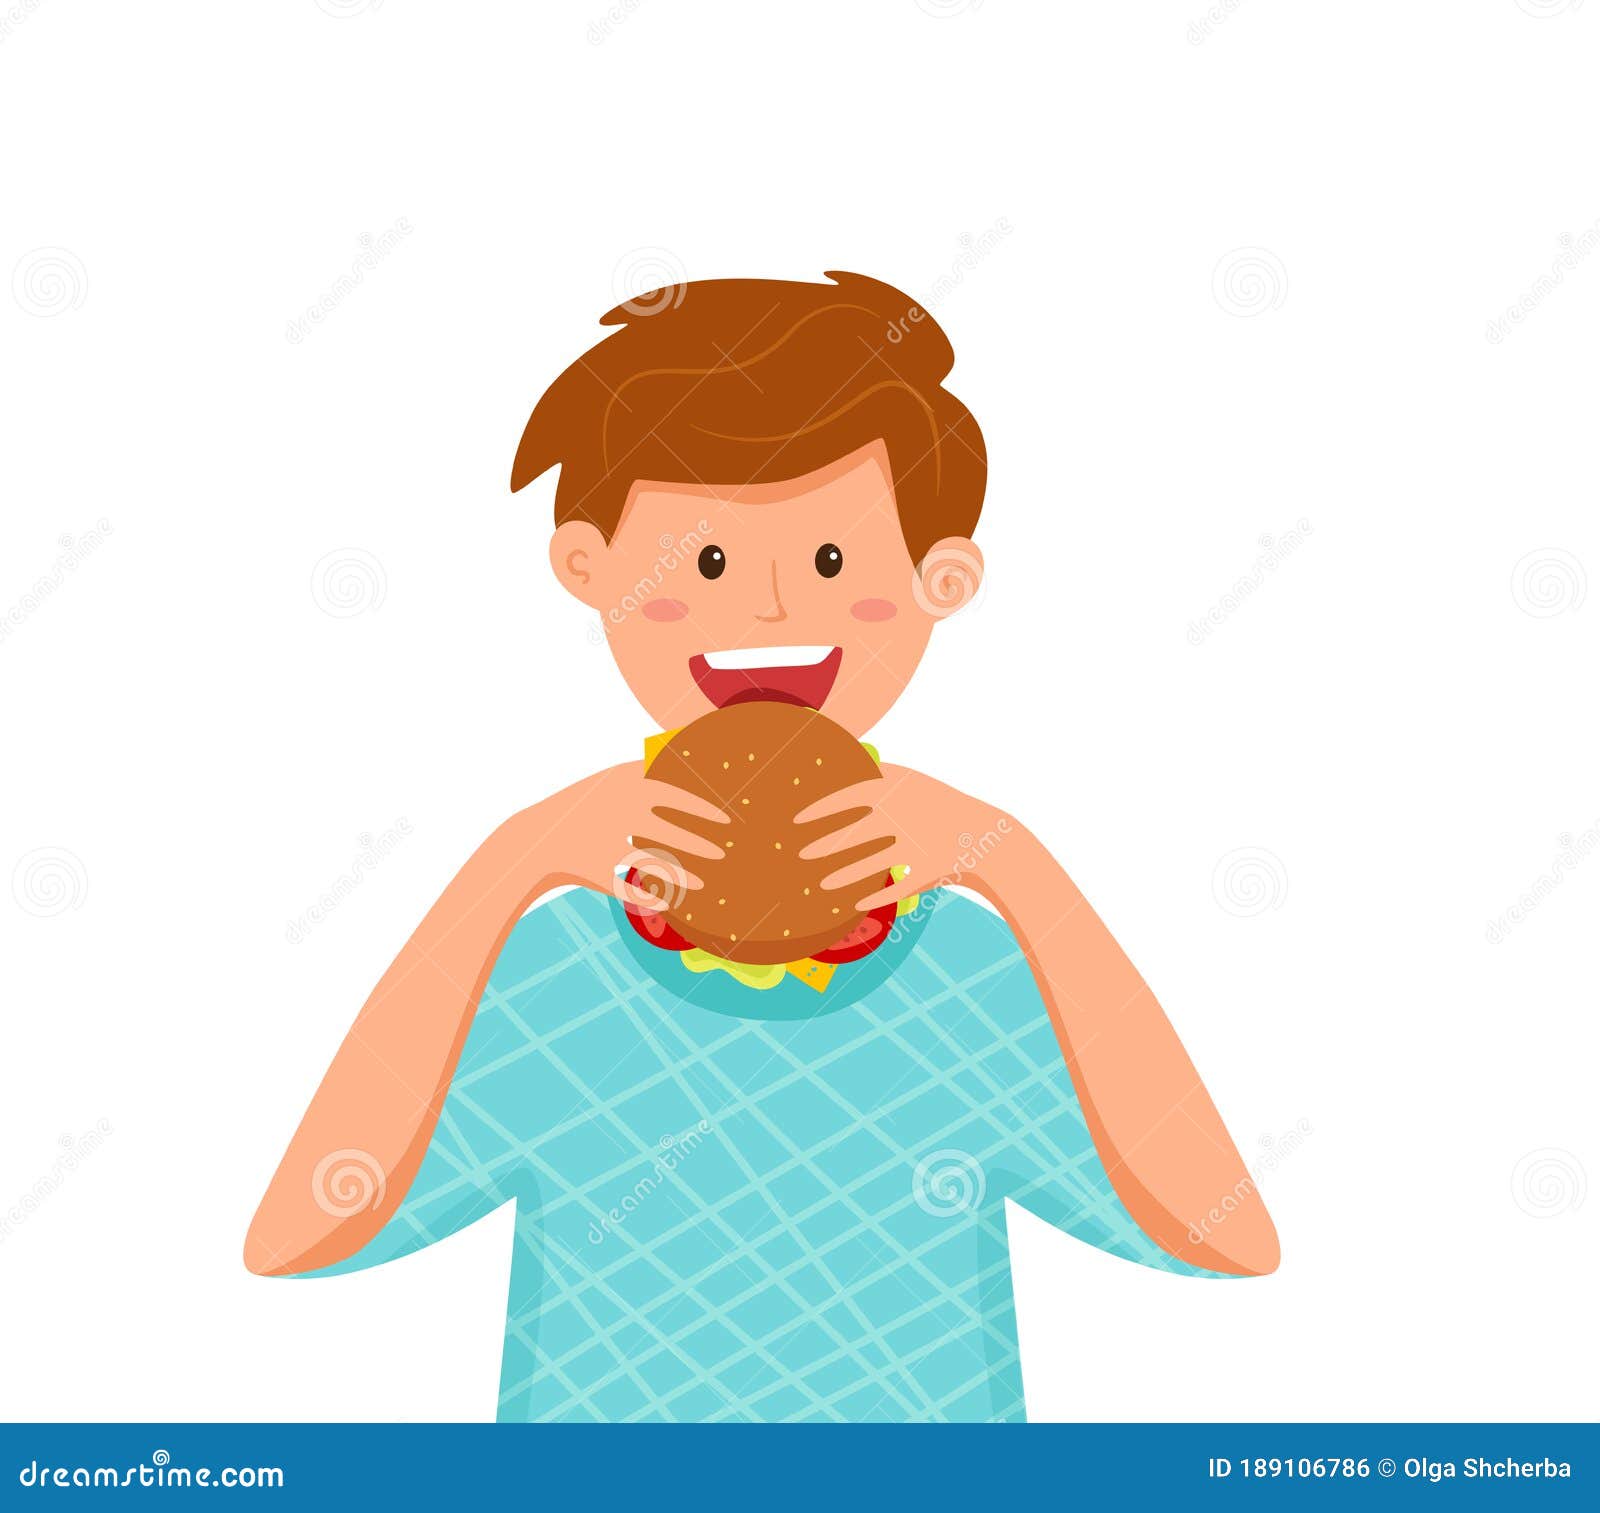 Kid Biting Burger Fast Food Vector Illustration. Colorful Cartoon Style  Concept Stock Vector - Illustration of human, childhood: 189106786